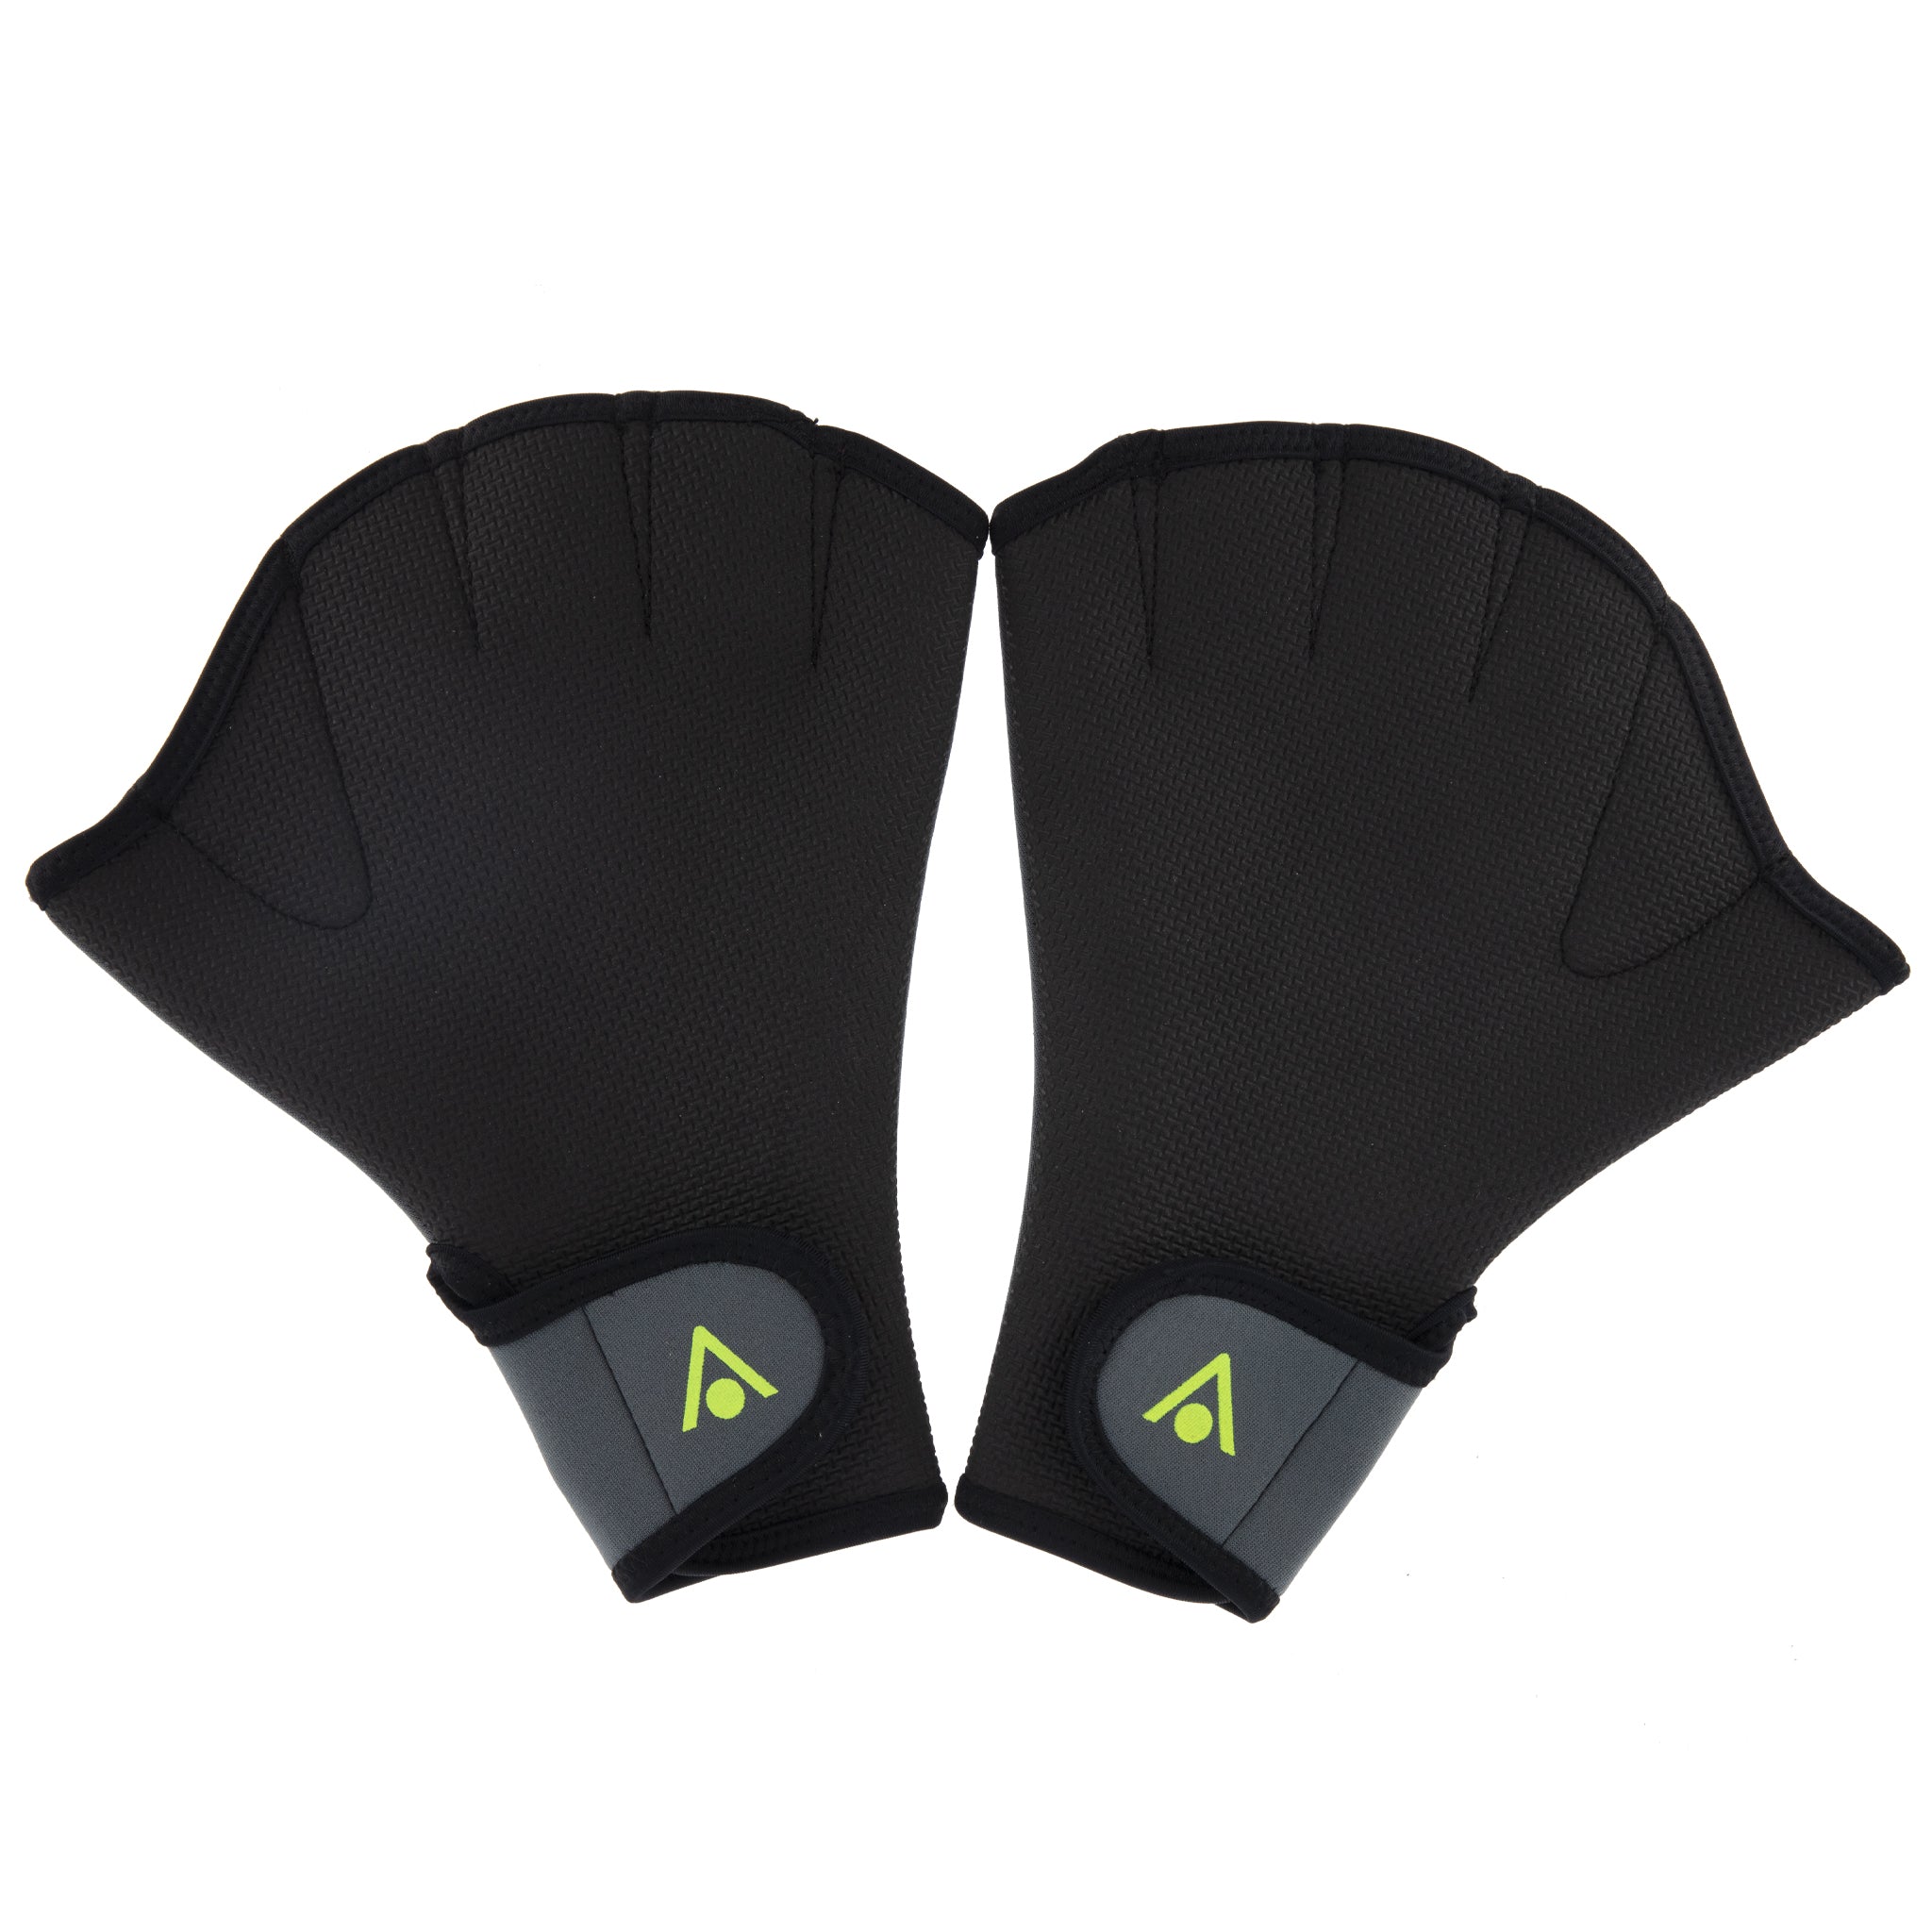 Aquasphere Webbed Swimming Gloves - Mesh neoprene one side